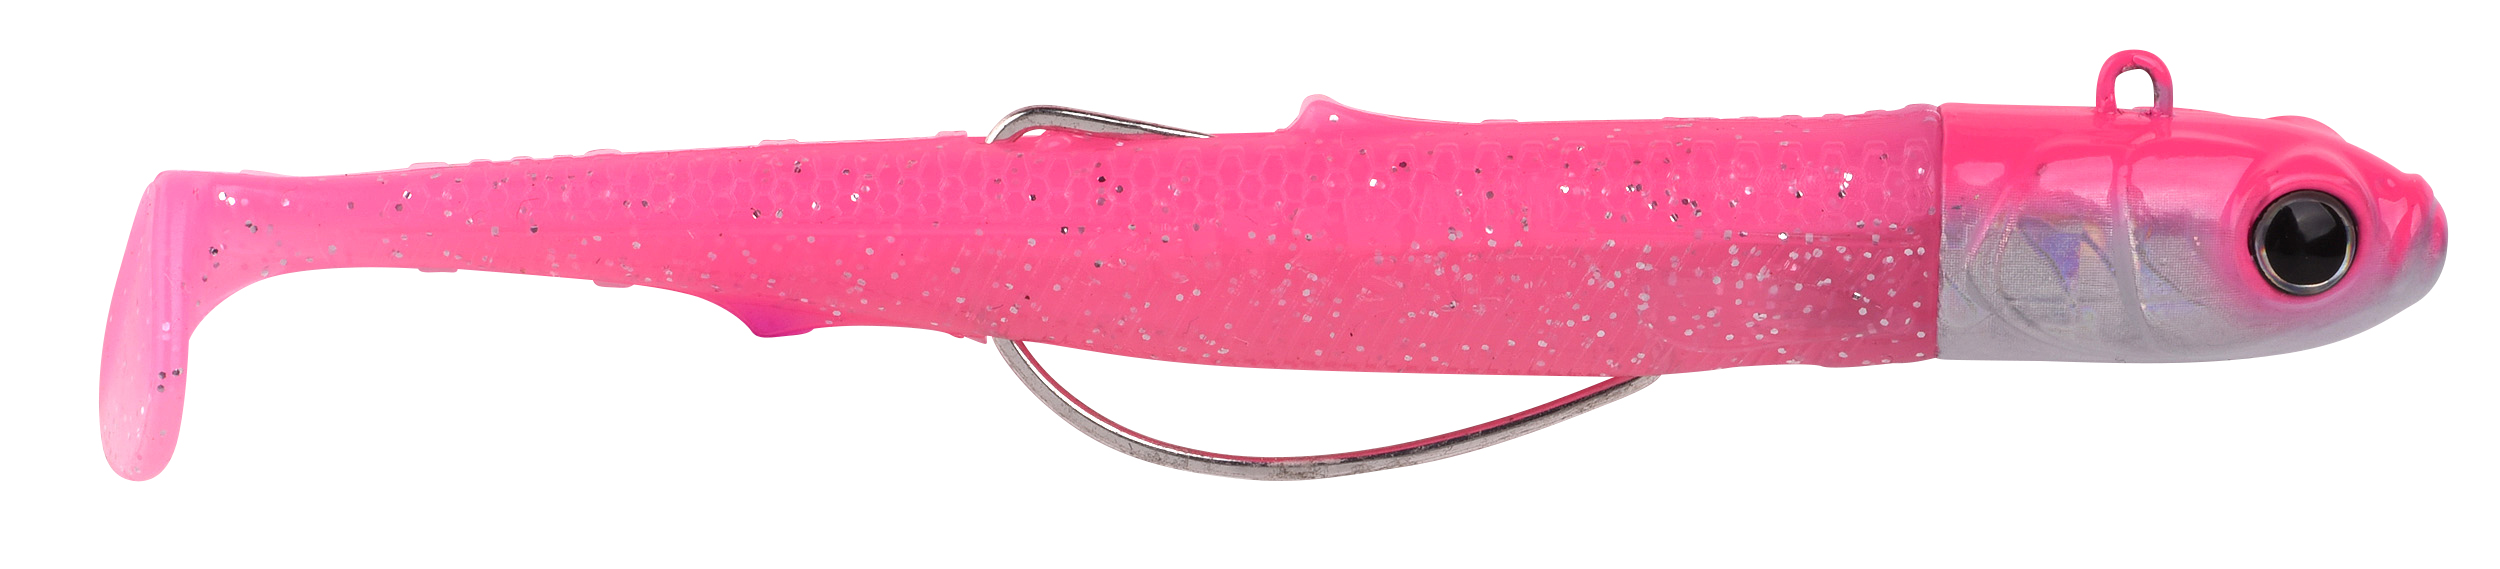 Spro Gutsbait Salt Softbait Pesci Marini 8cm (15g) - Pink Minnow